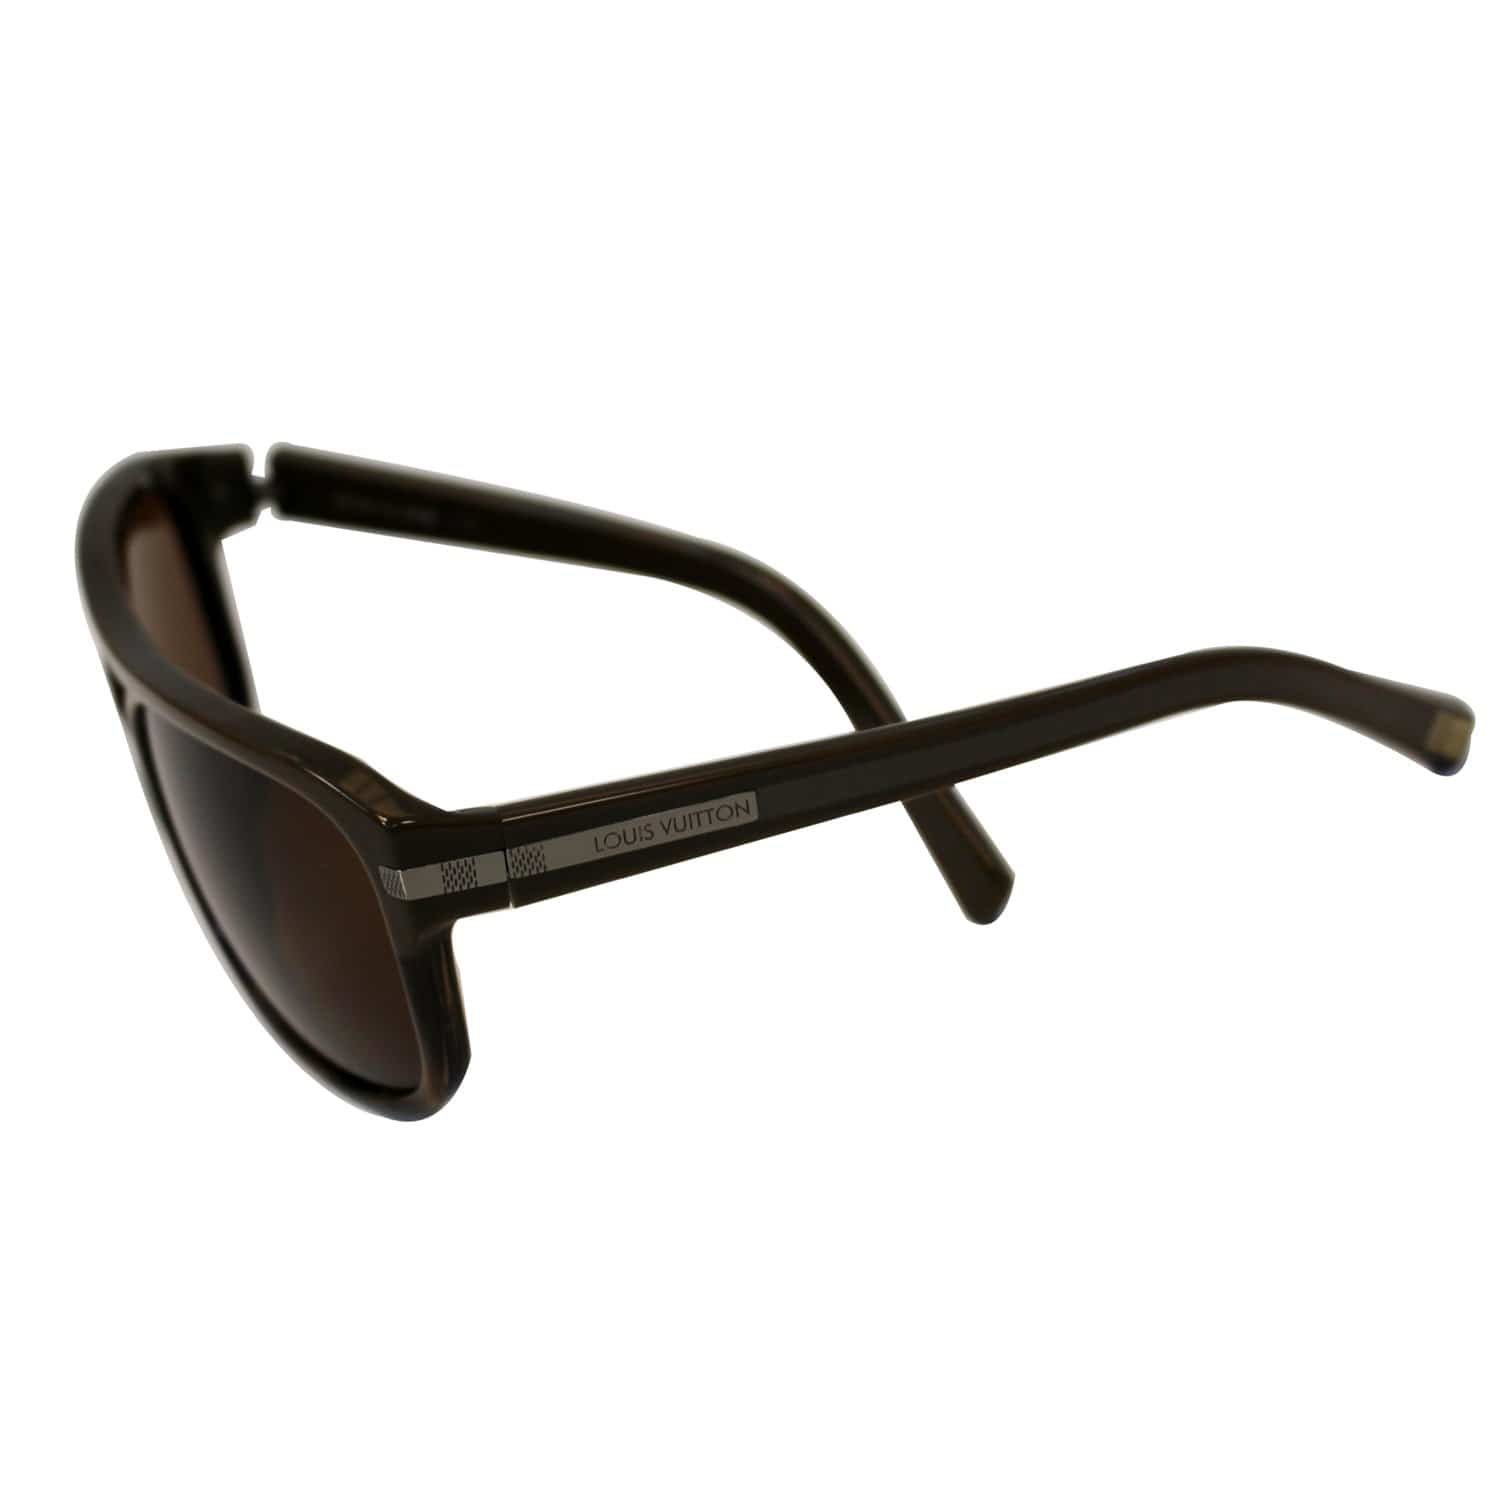 Louis Vuitton Sunglasses Conspiracion Pilot Monogram Brown mens sunglasses